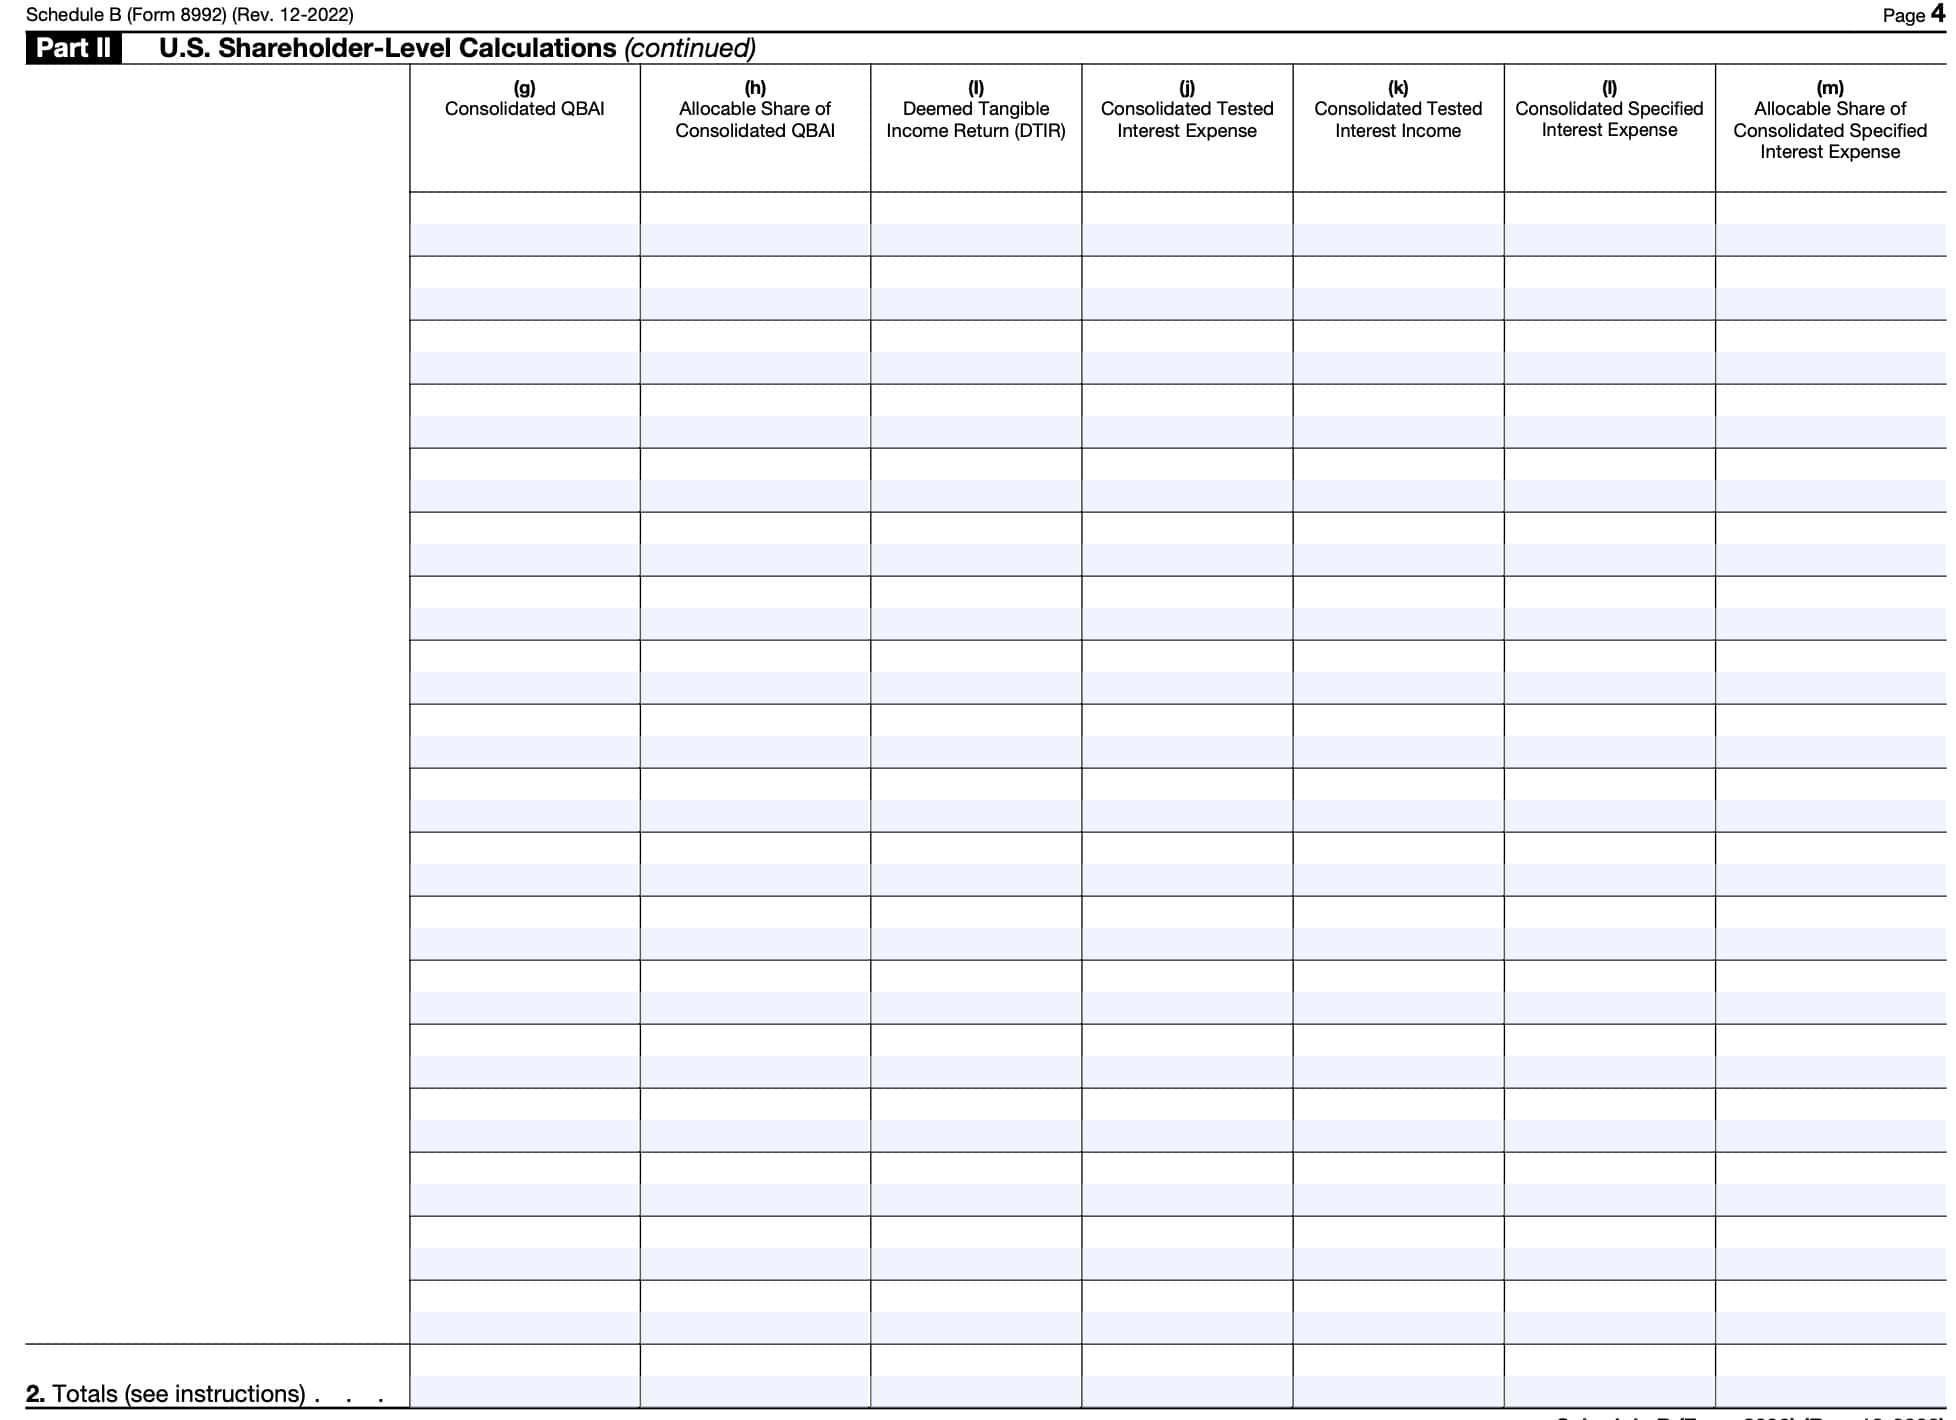 schedule b, part II: U.S. shareholder-level calculations, columns (g) through (m)